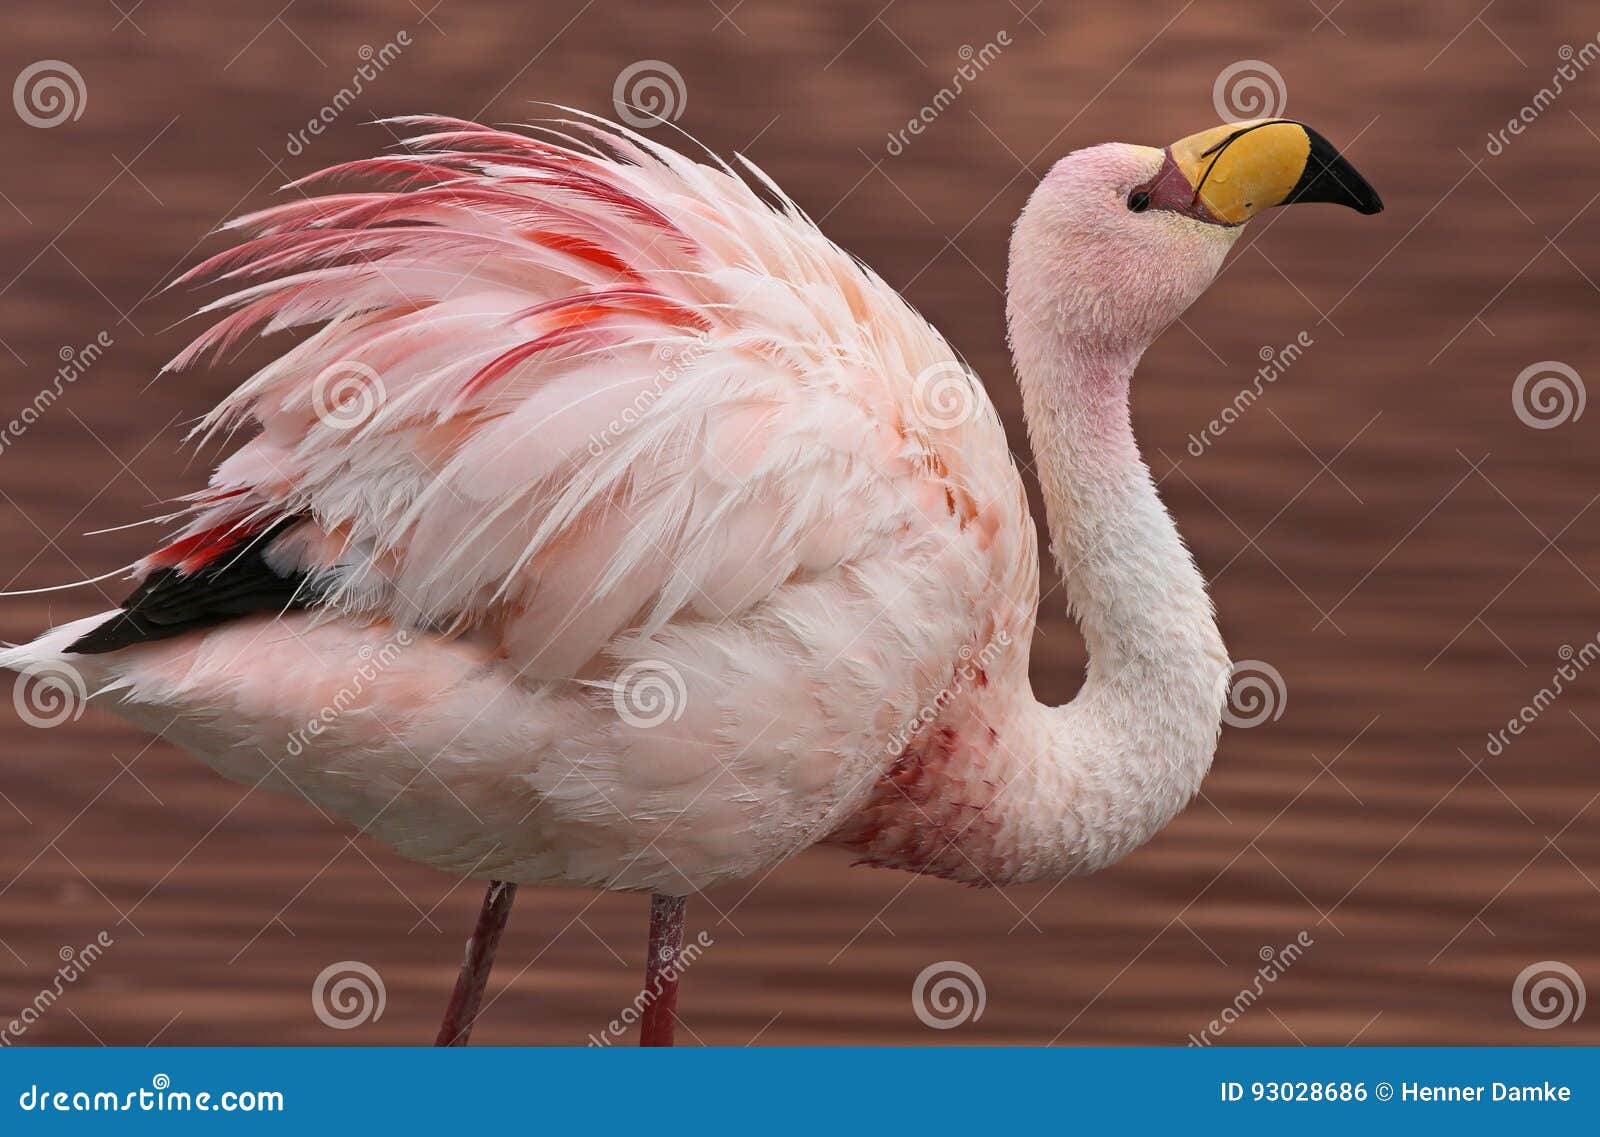 james flamingo at laguna colorada bolivia